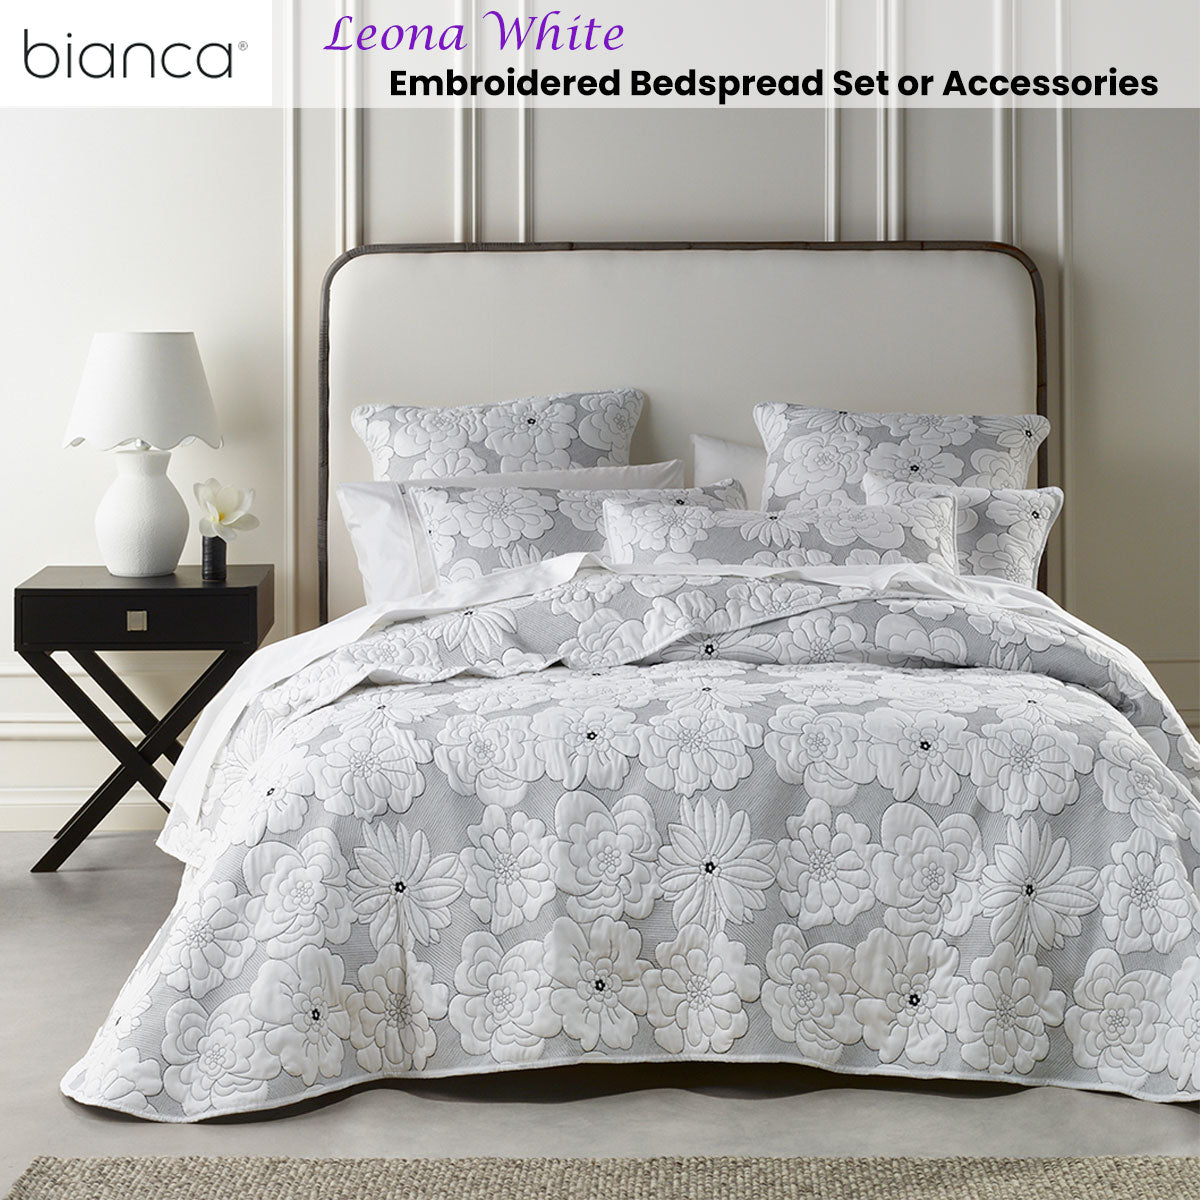 Bianca Leona White 4 Pcs Bedspread Set Queen